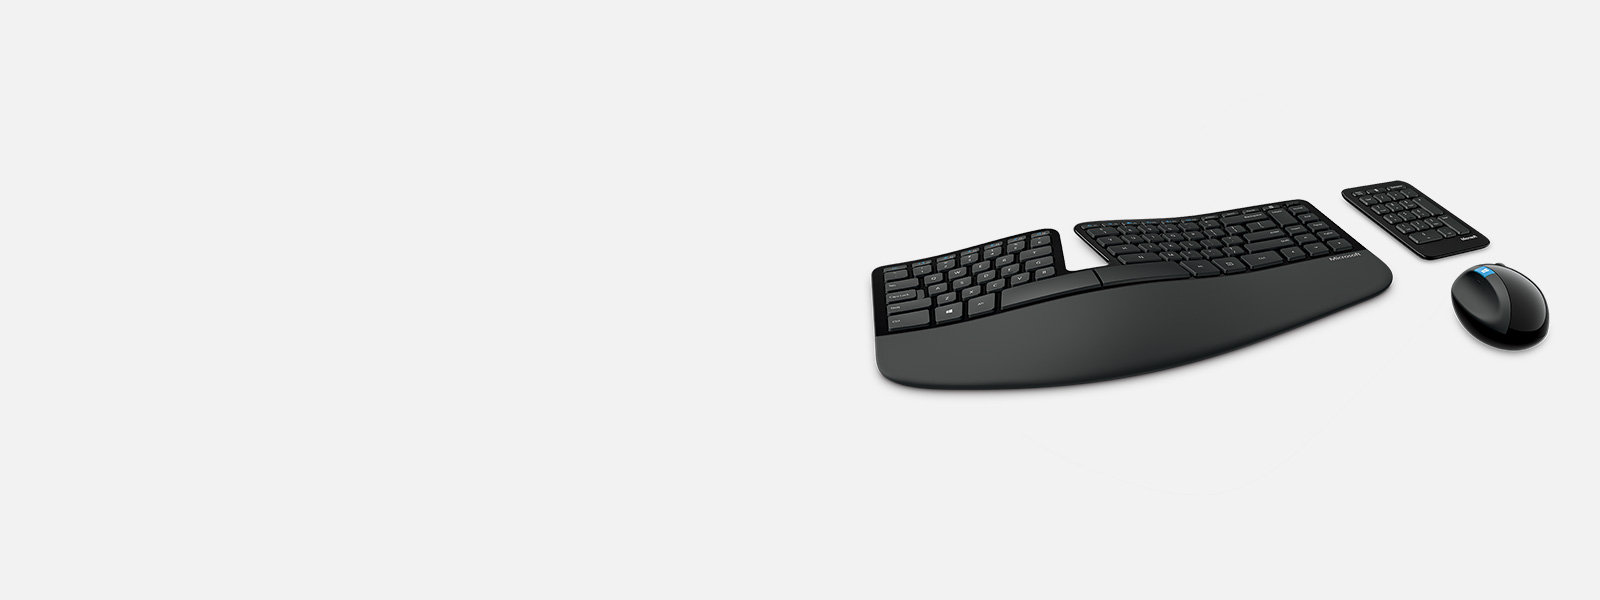 Sculpt Desktop Keyboard & Mouse Accessories